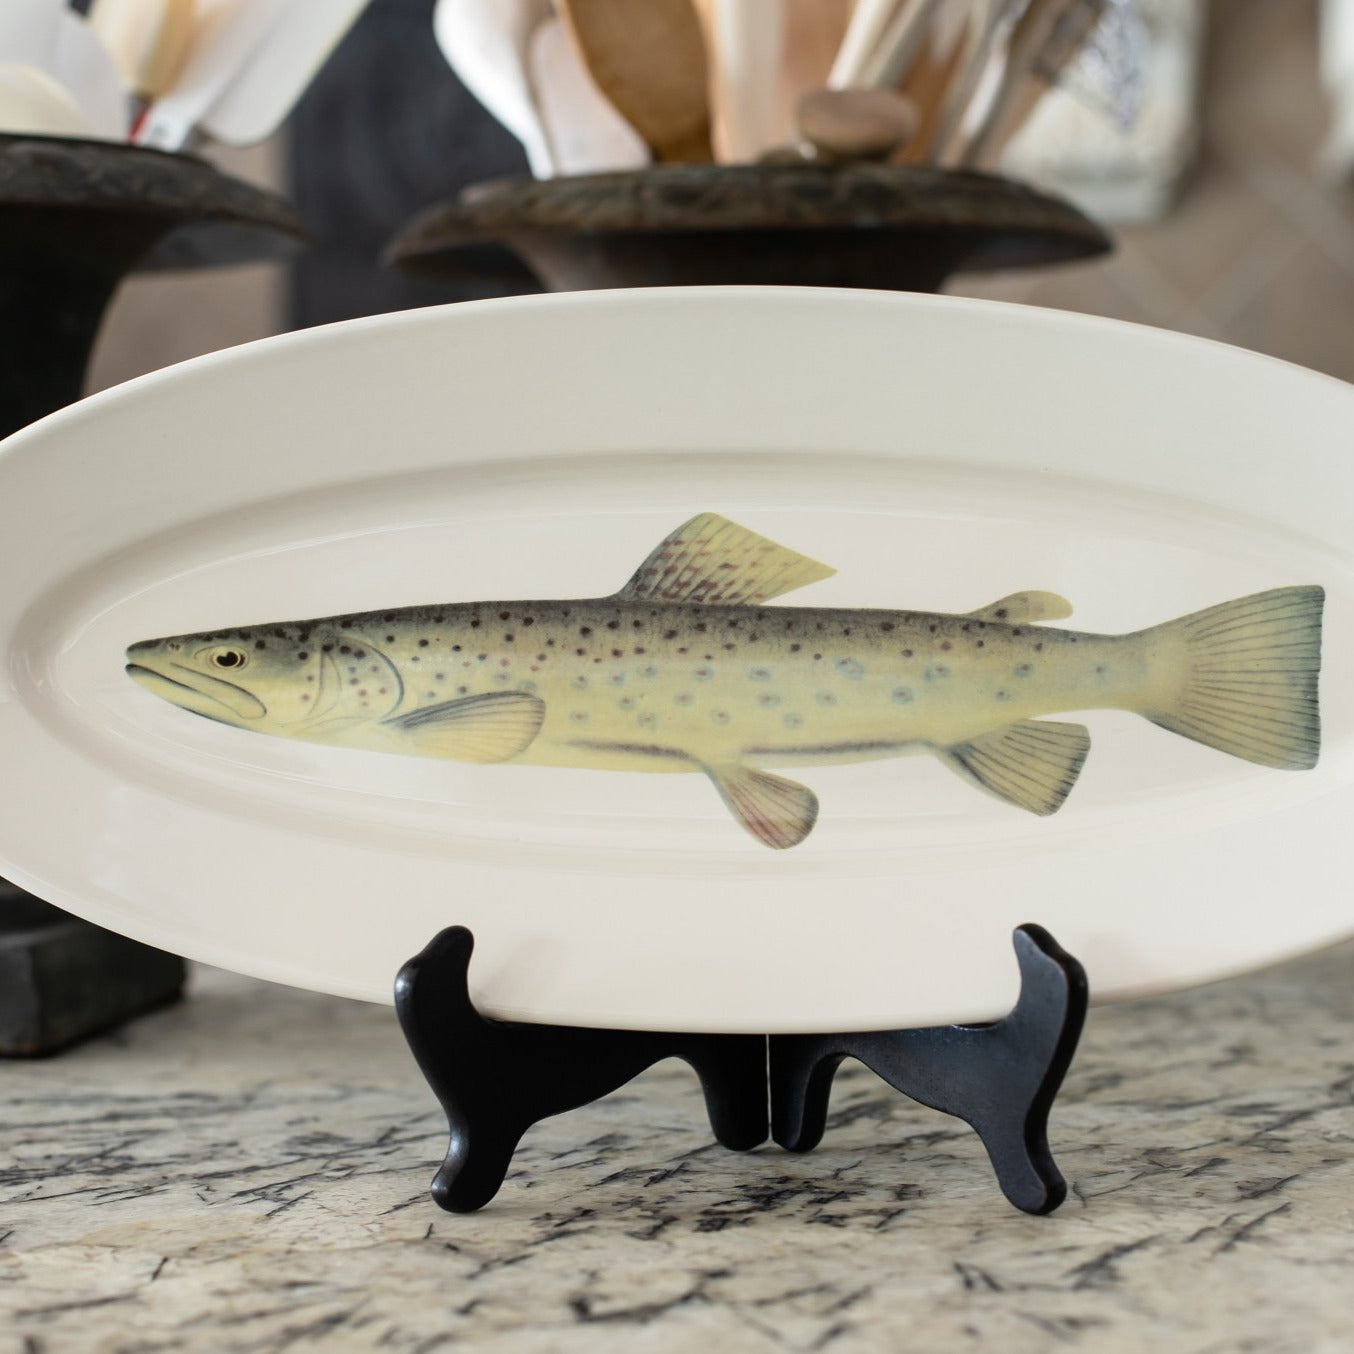 Trout Fish Platter Elongated